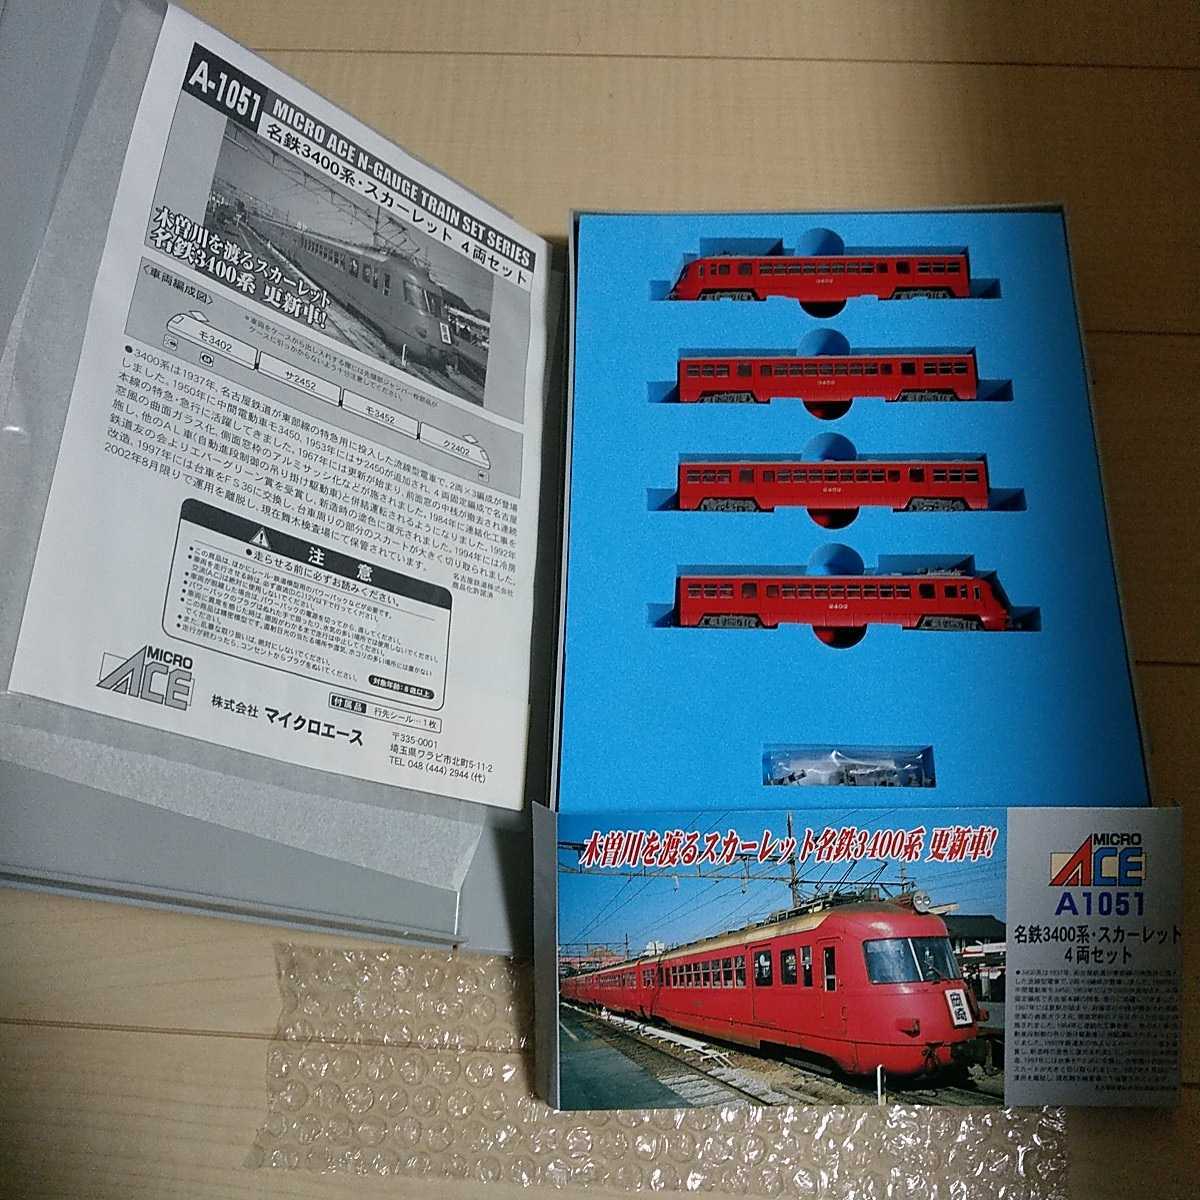 SALE／89%OFF】 マイクロエース Nゲージ 名鉄3400系 スカーレット 4両セット A1055 鉄道模型 電車 